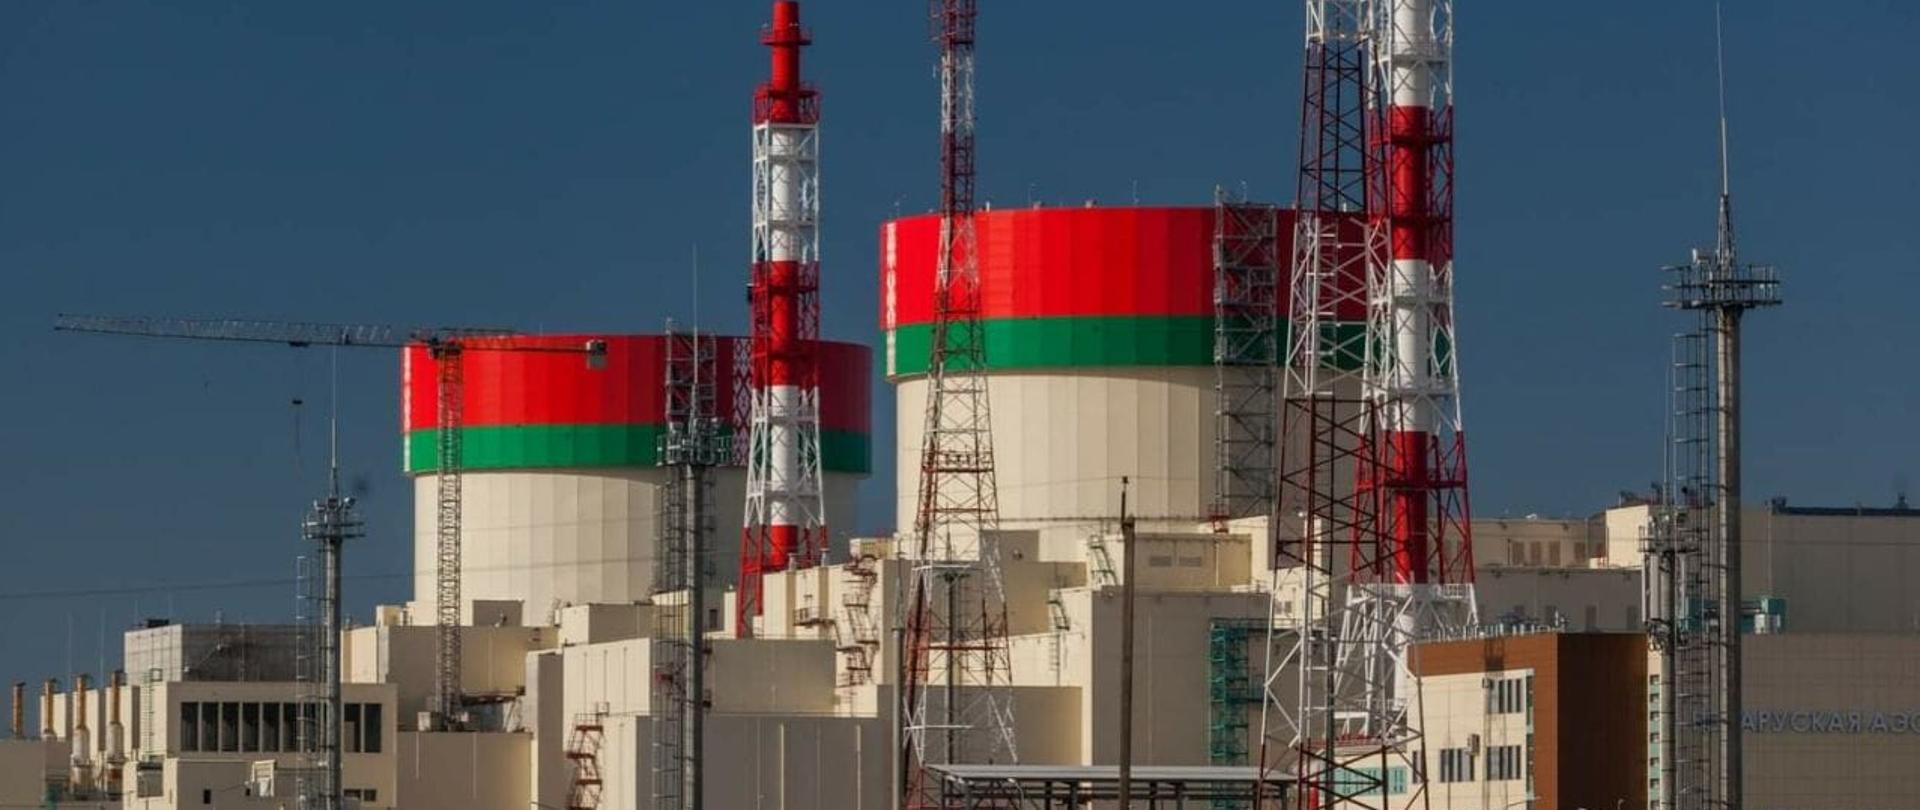 Elektrownia jądrowa w Ostrowcu na Białorusi / Źródło: Facebook / Министерство энергетики Республики Беларусь